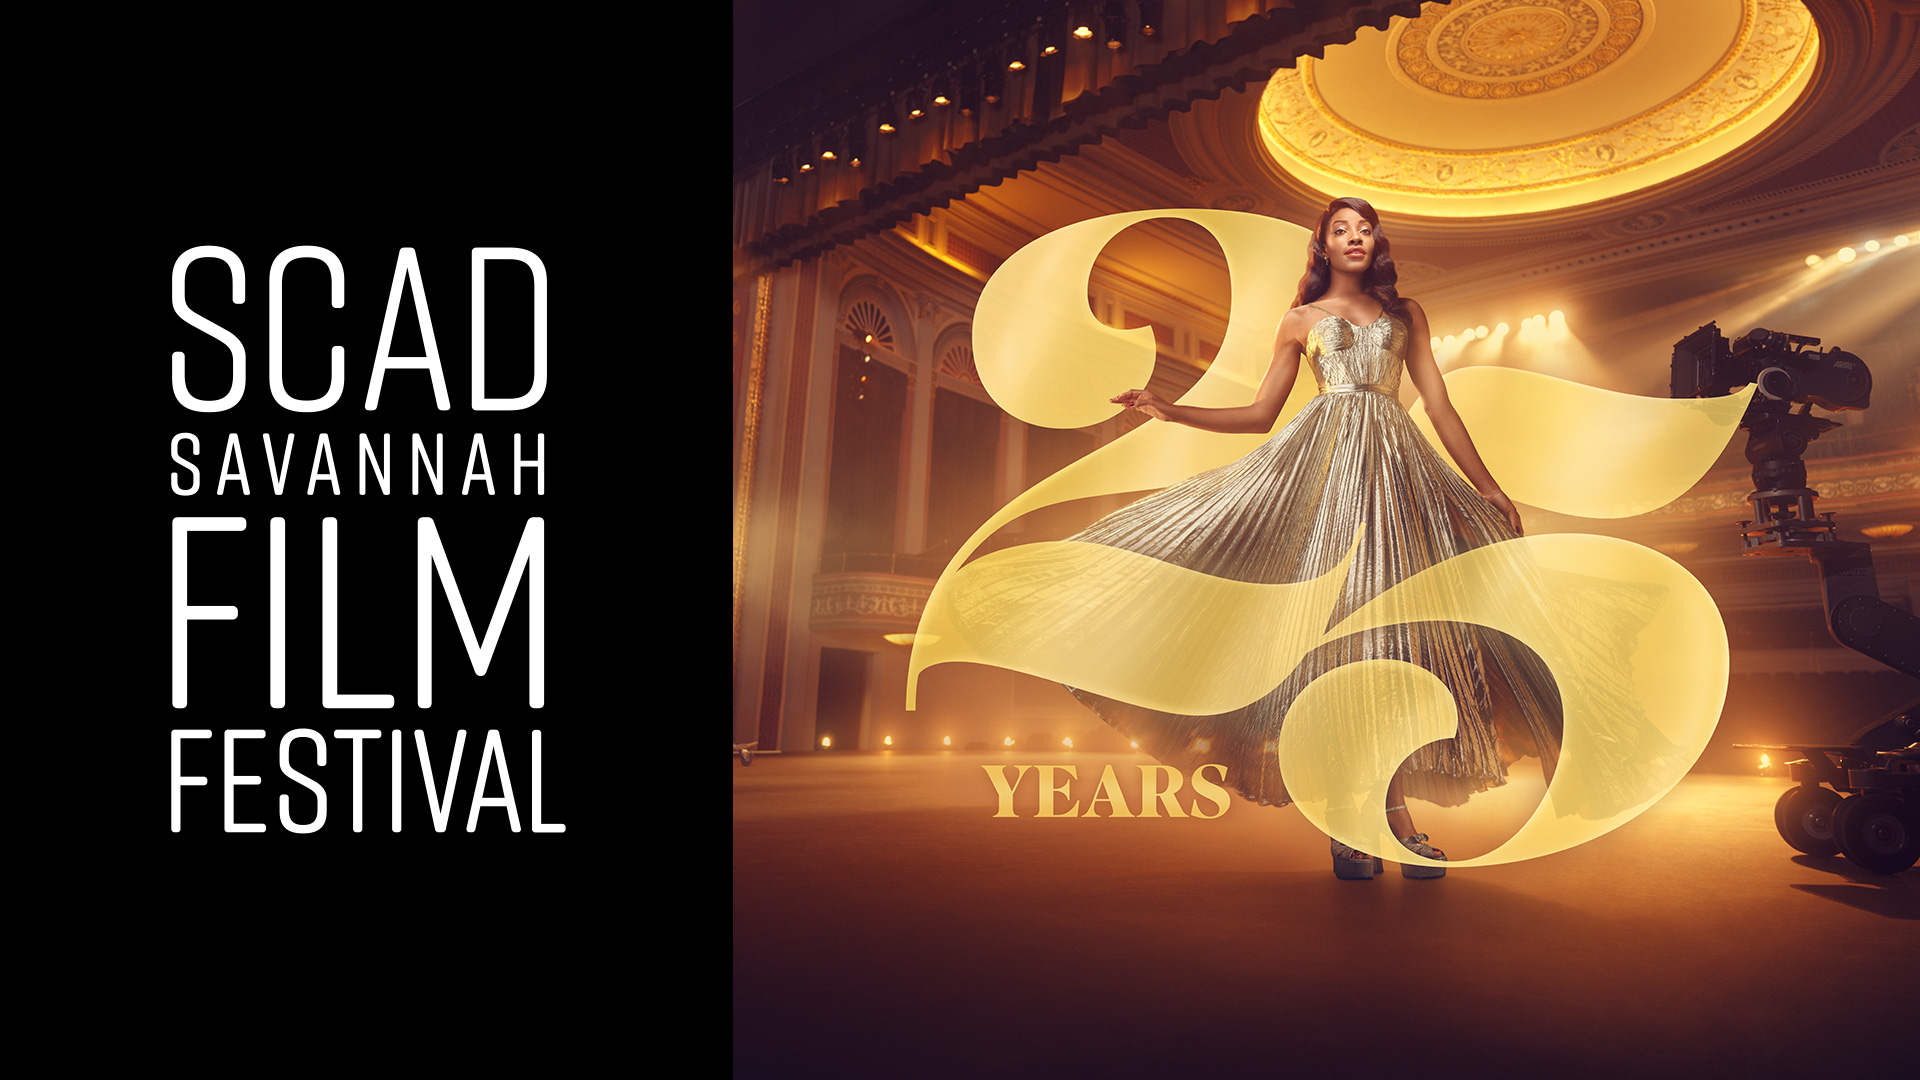 SCAD Savannah Film Festival Branded Creative 2022 2 